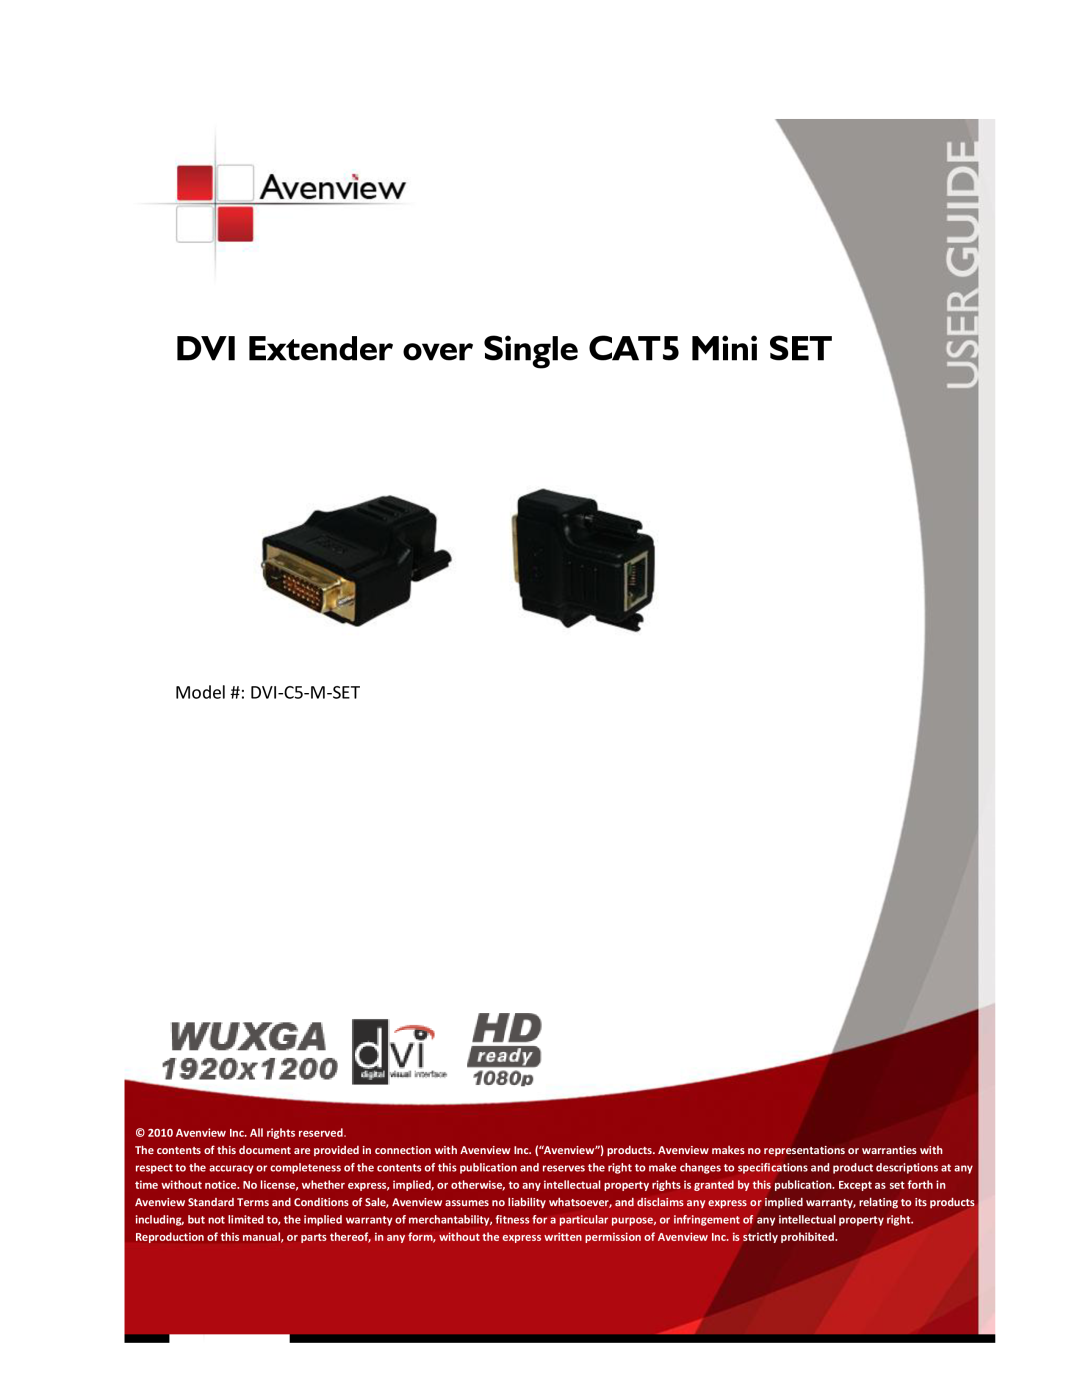 Avenview specifications Model # DVI-C5-M-SET, DVI Extender over Single CAT5 Mini SET 